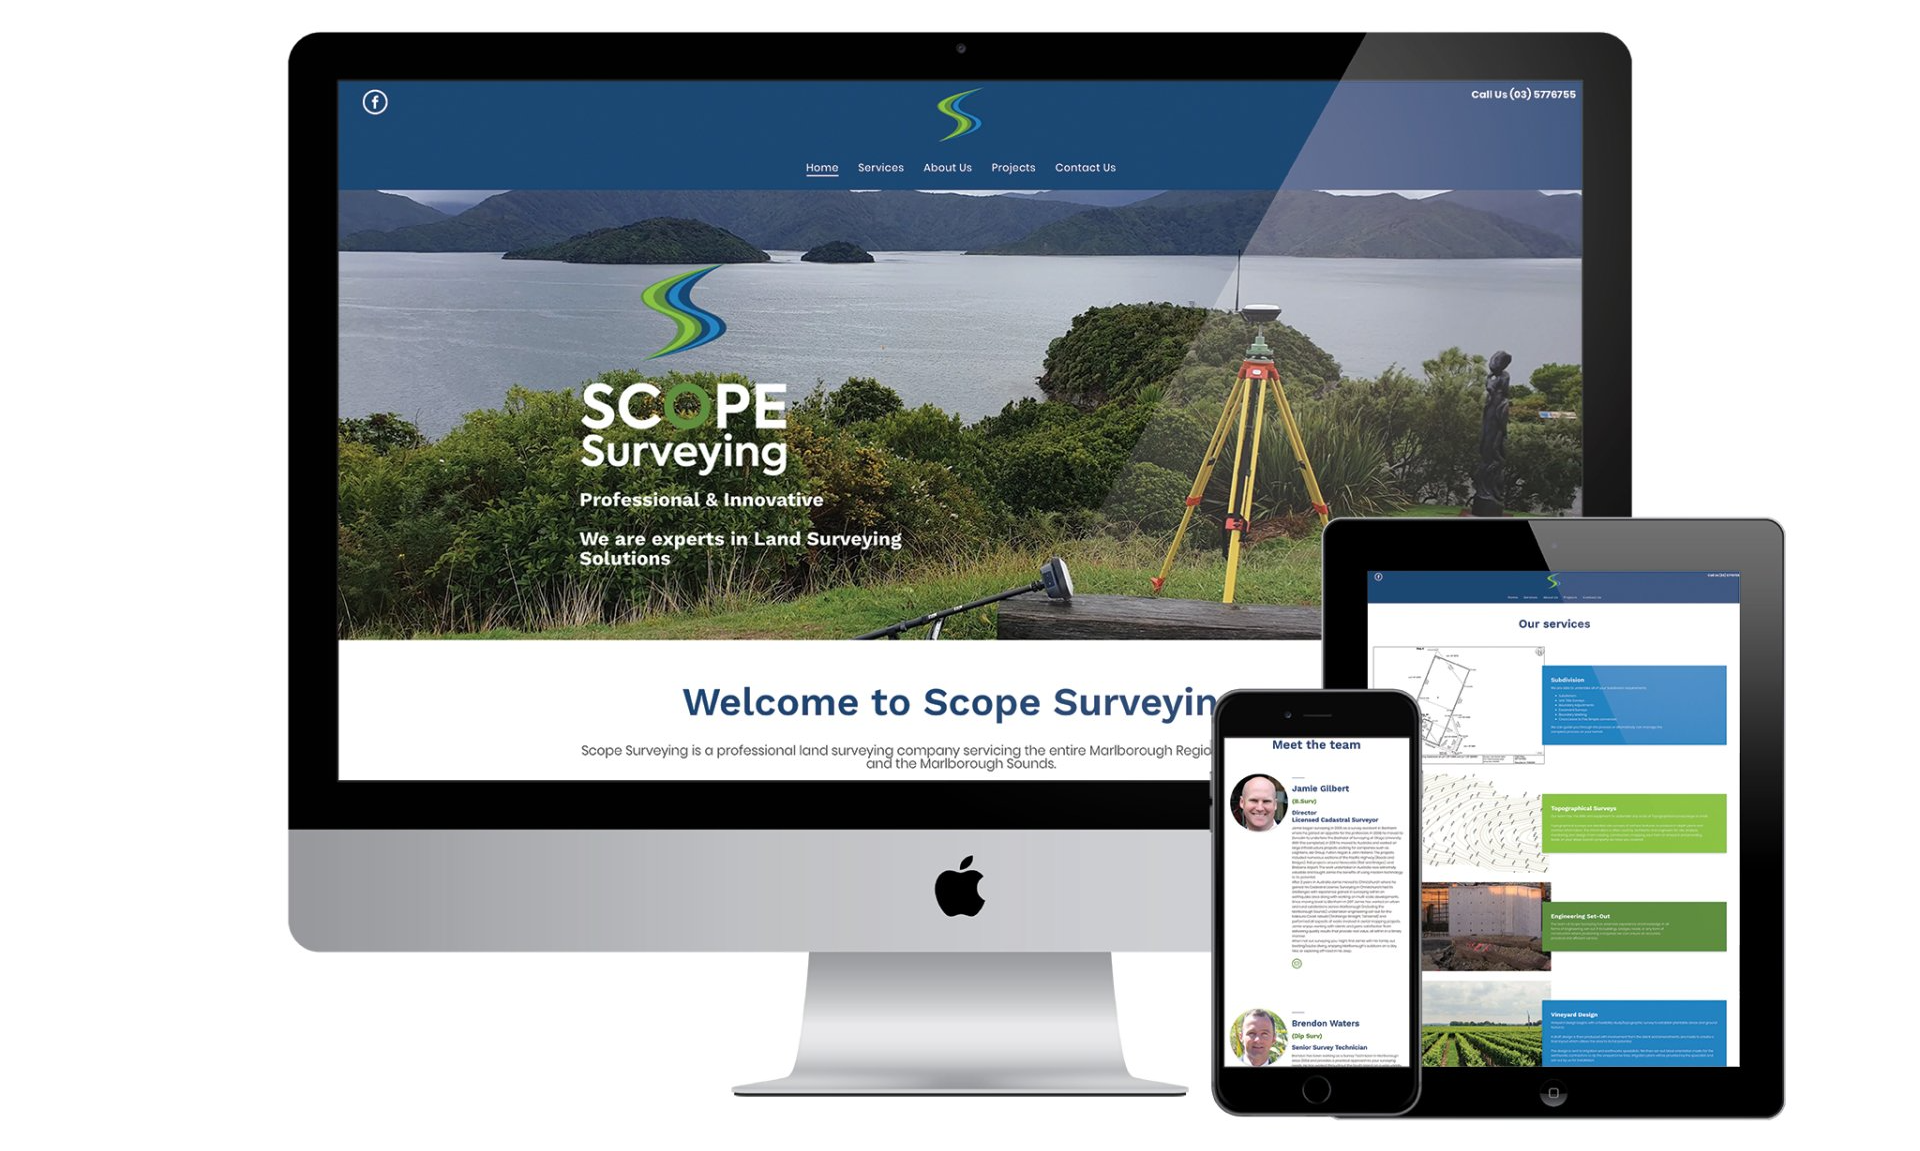 Scope Surveying website designed by Vanilla Hayes creative graphic design  studio in Blenheim, Marlborough, New Zealand